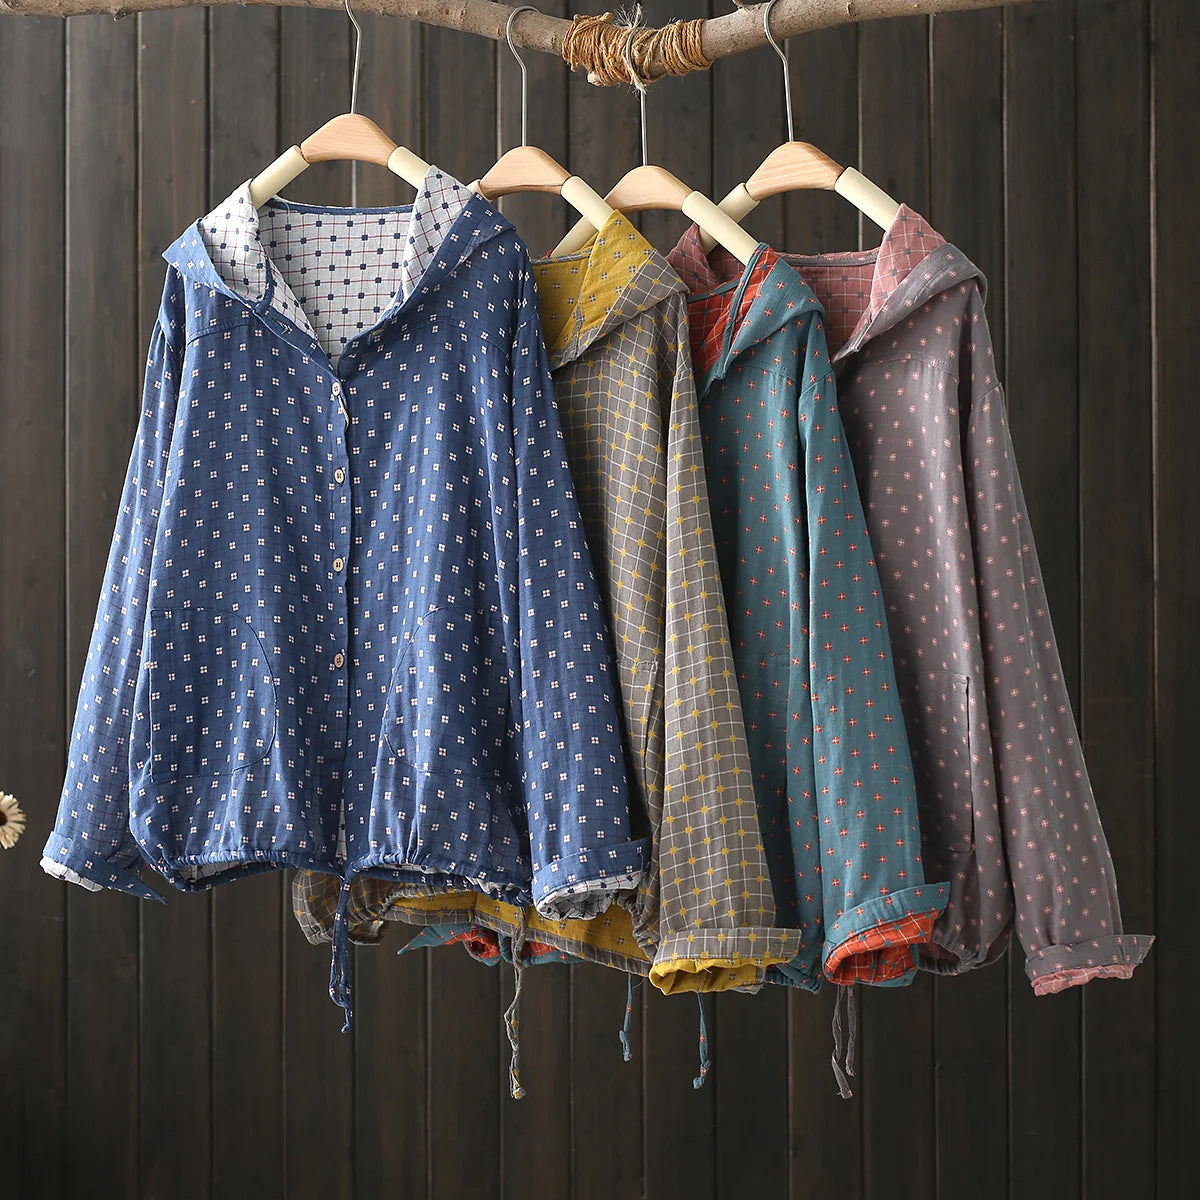 Large size blouses for women autumn spring hooded long sleeve single-breasted shirts adjustable women's clothing KilyClothing